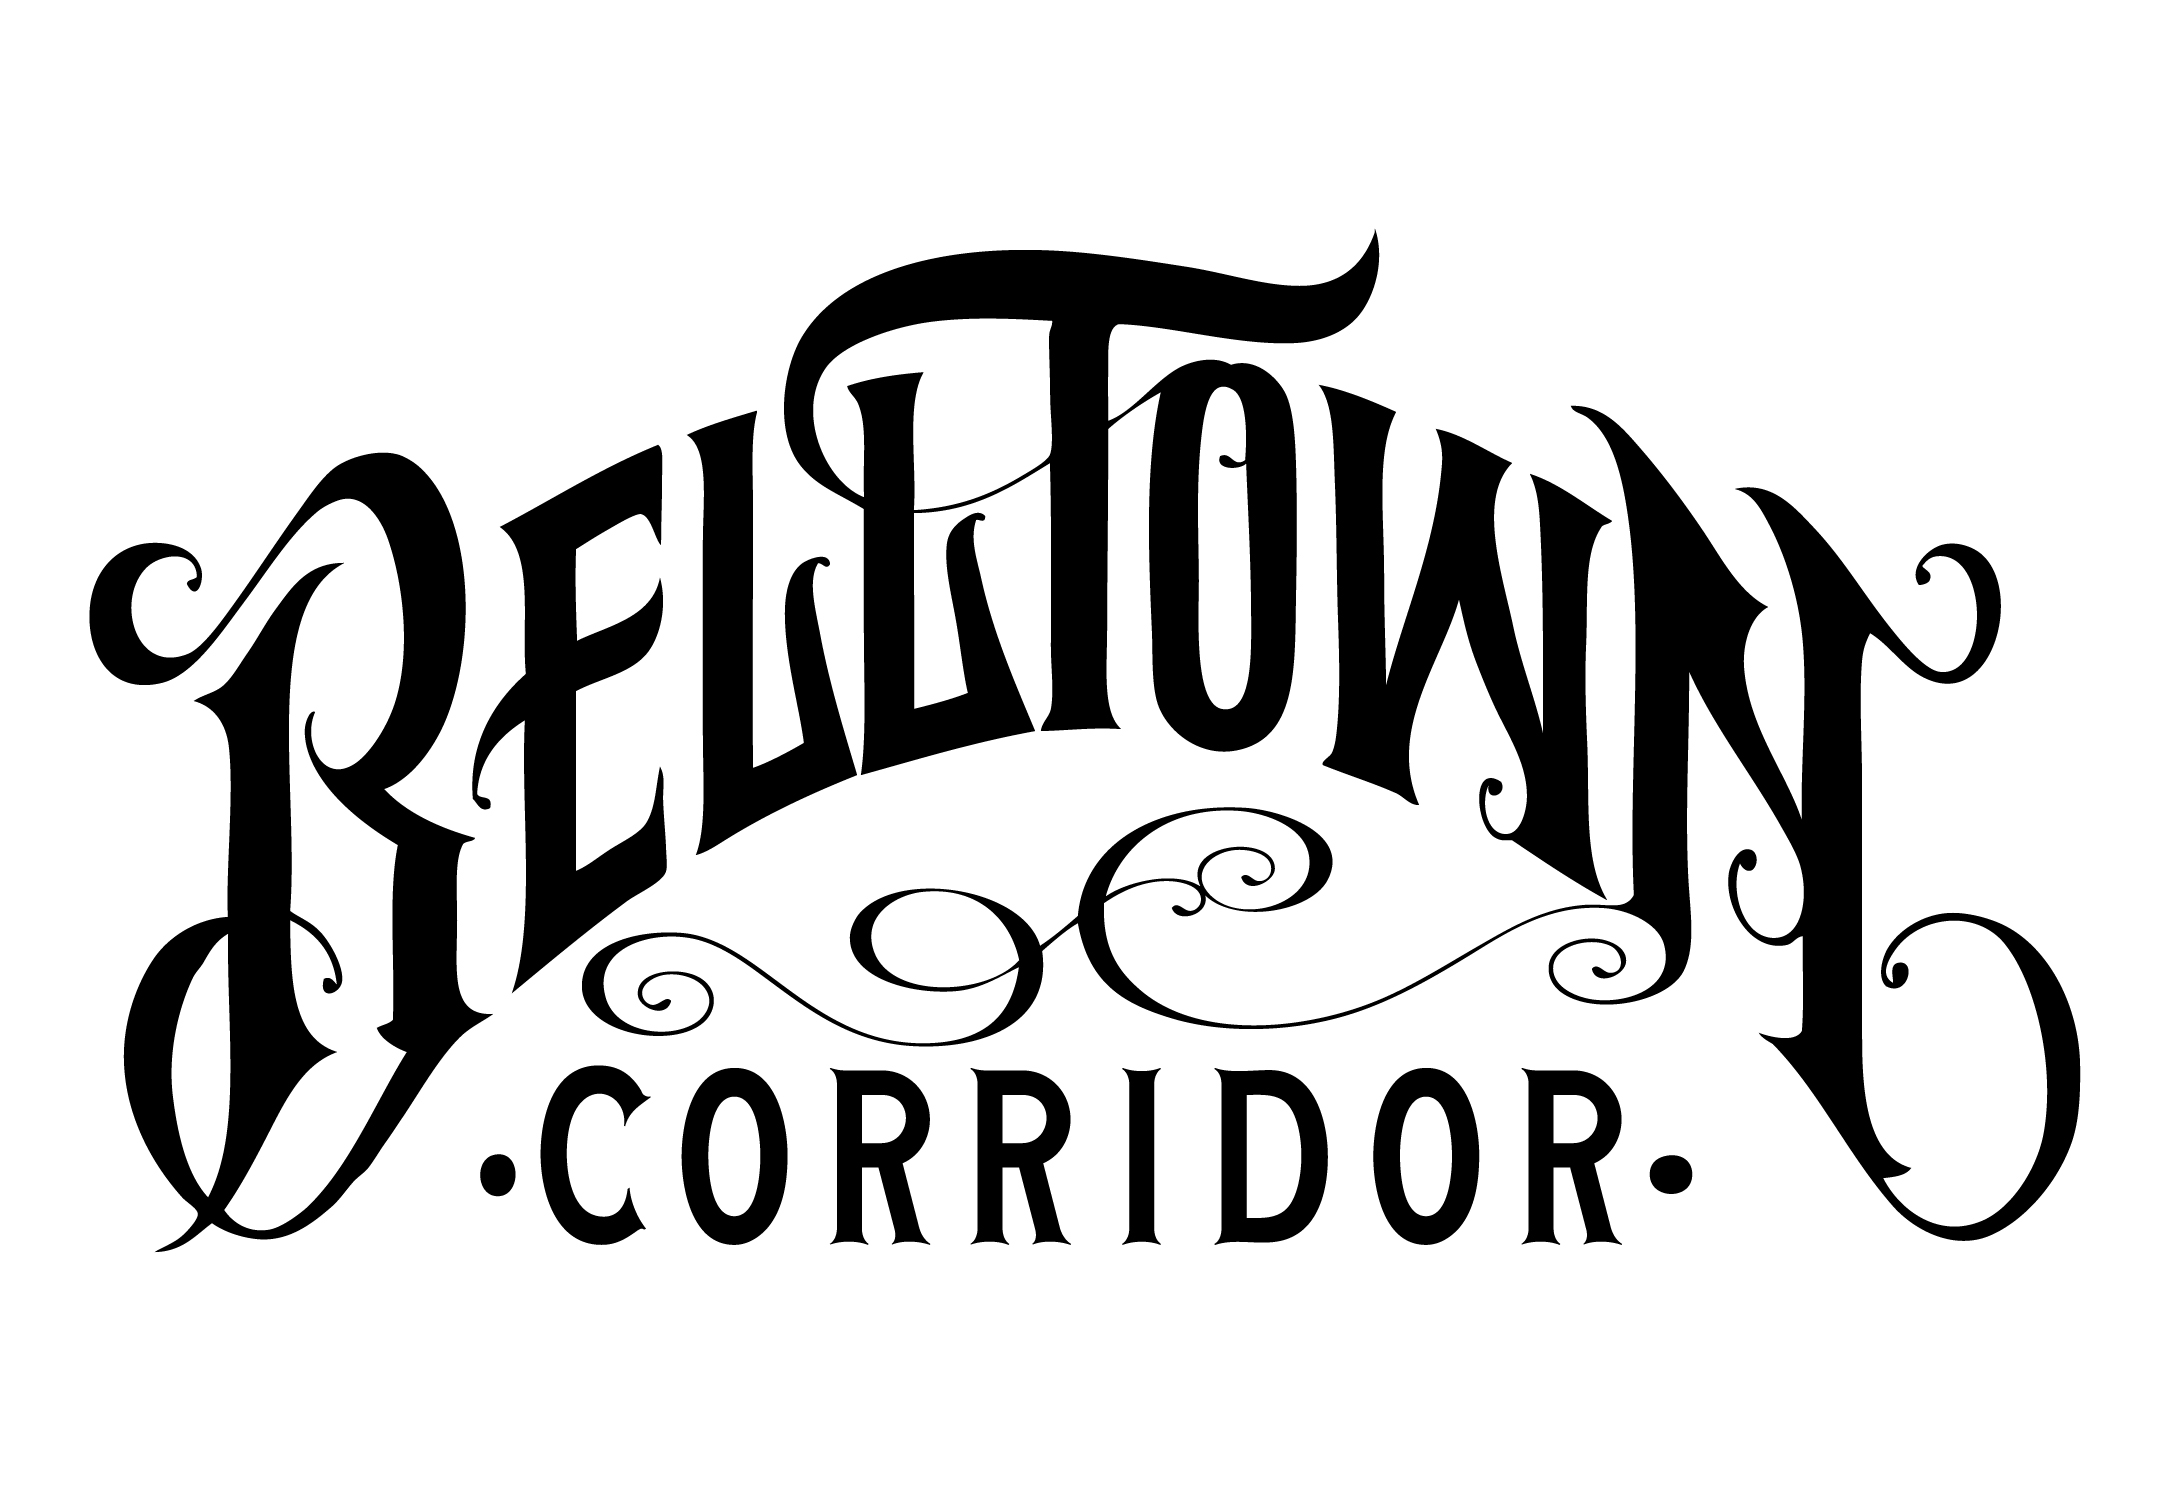 Belltown Corridor 